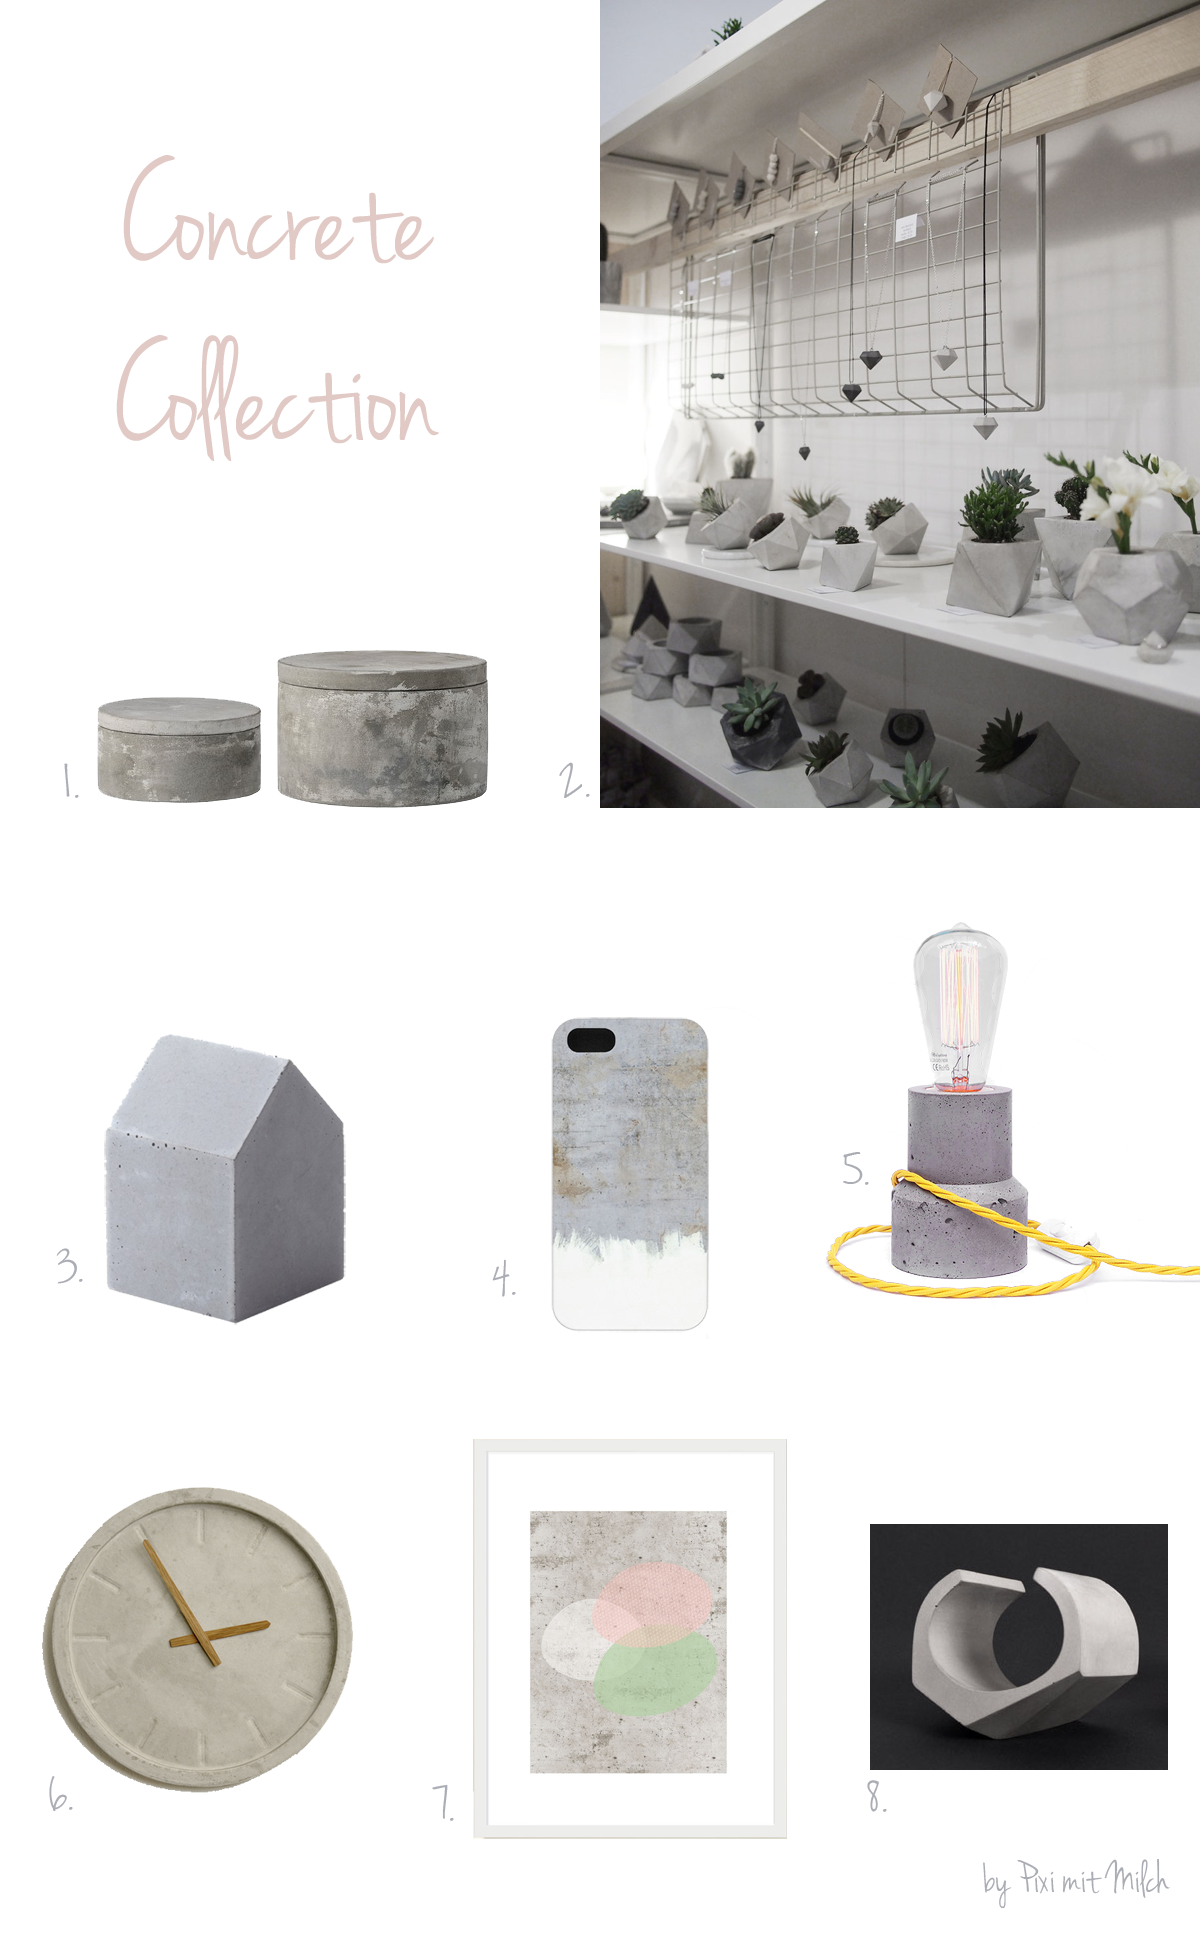 Concrete Collection | Pixi mit Milch